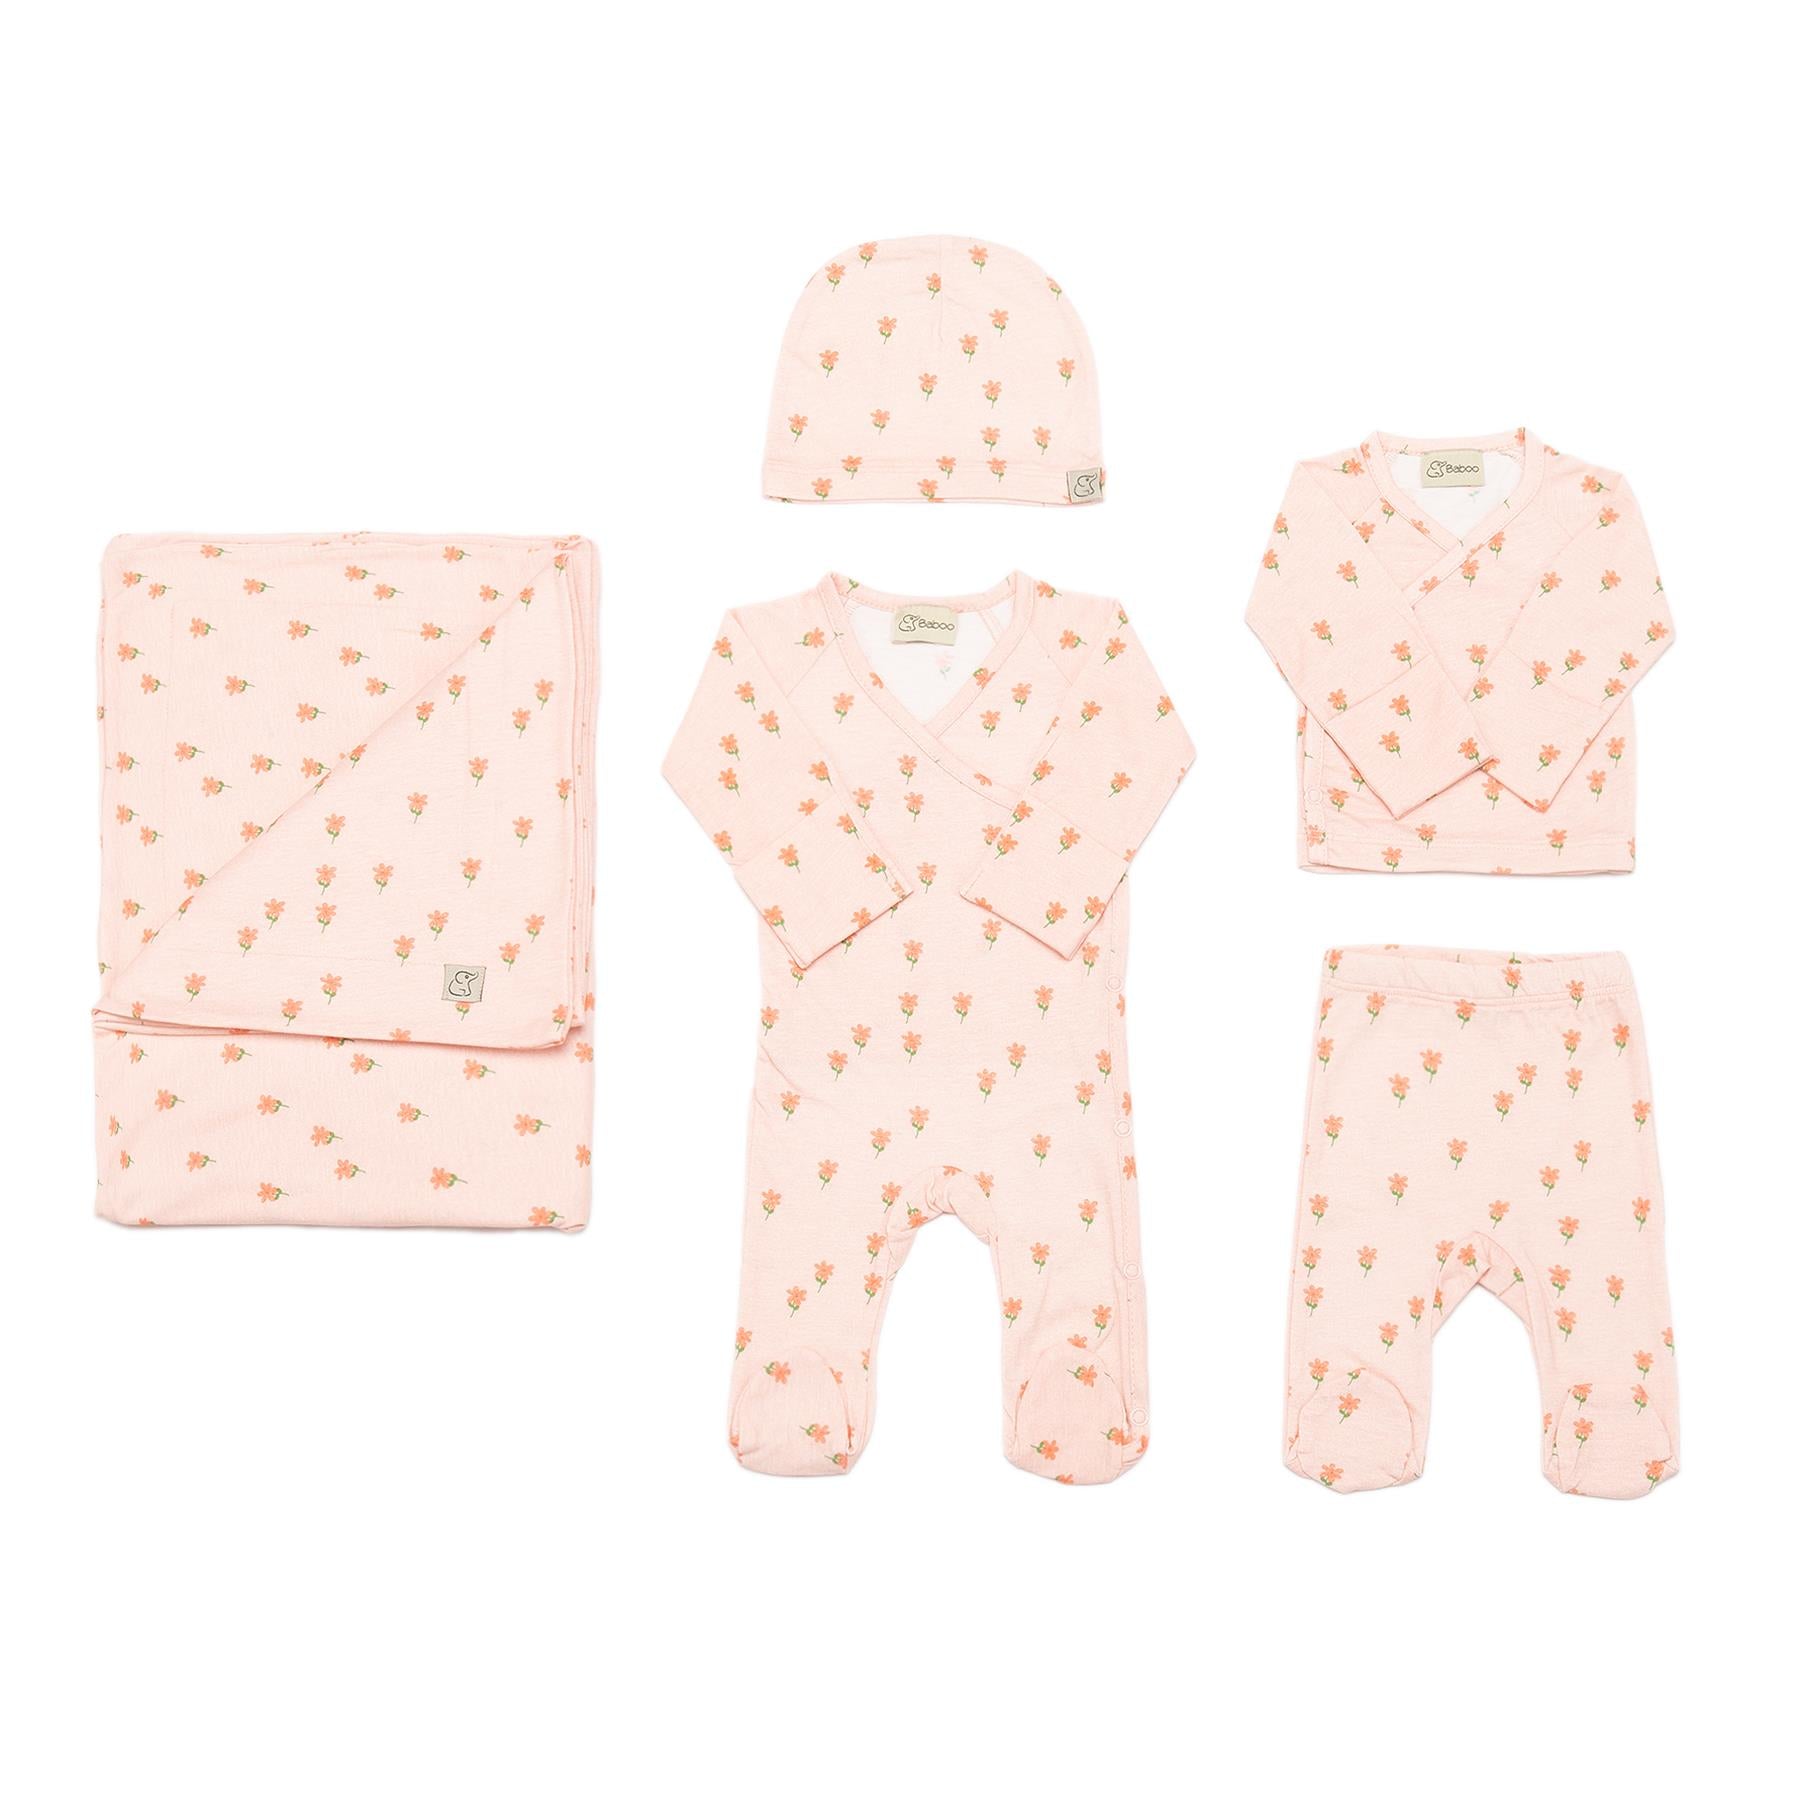 Newborn Patterned Organic Cotton Hospital Release Set of 5 Pink